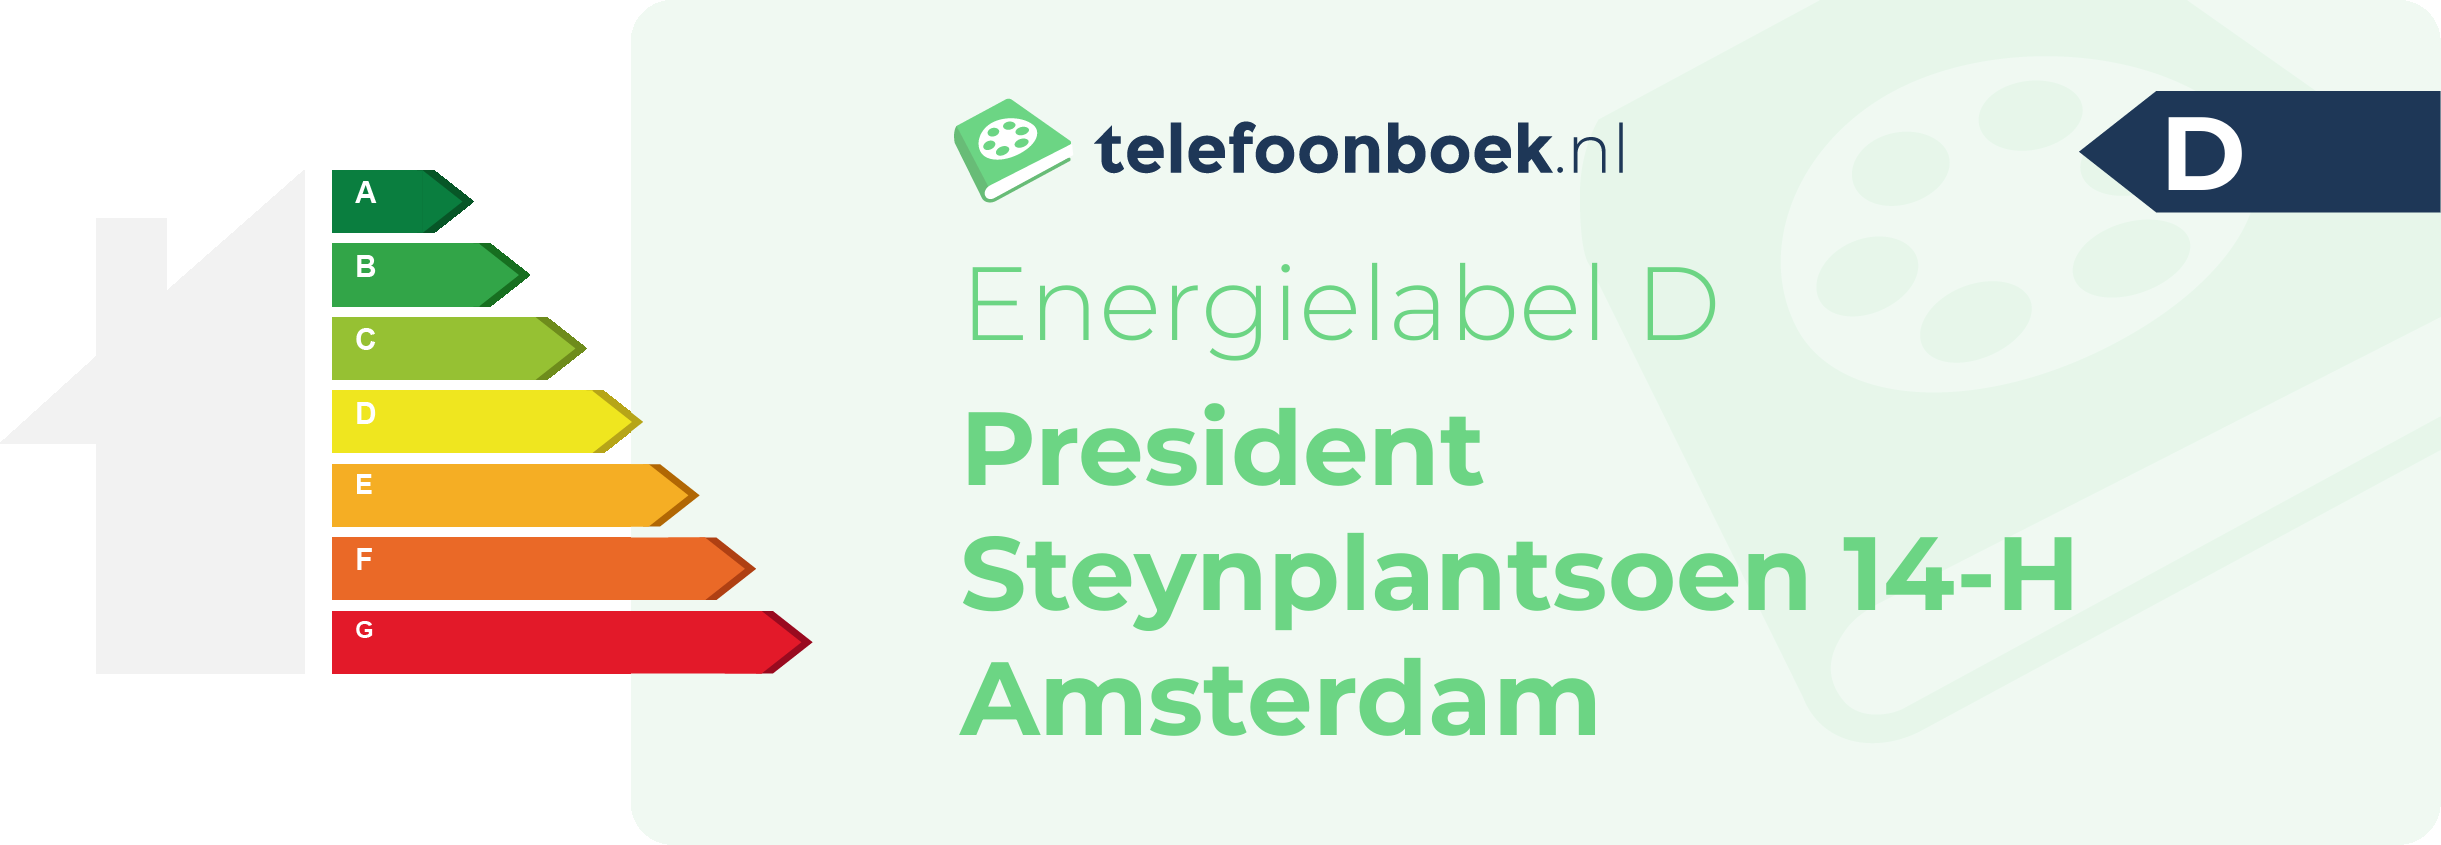 Energielabel President Steynplantsoen 14-H Amsterdam